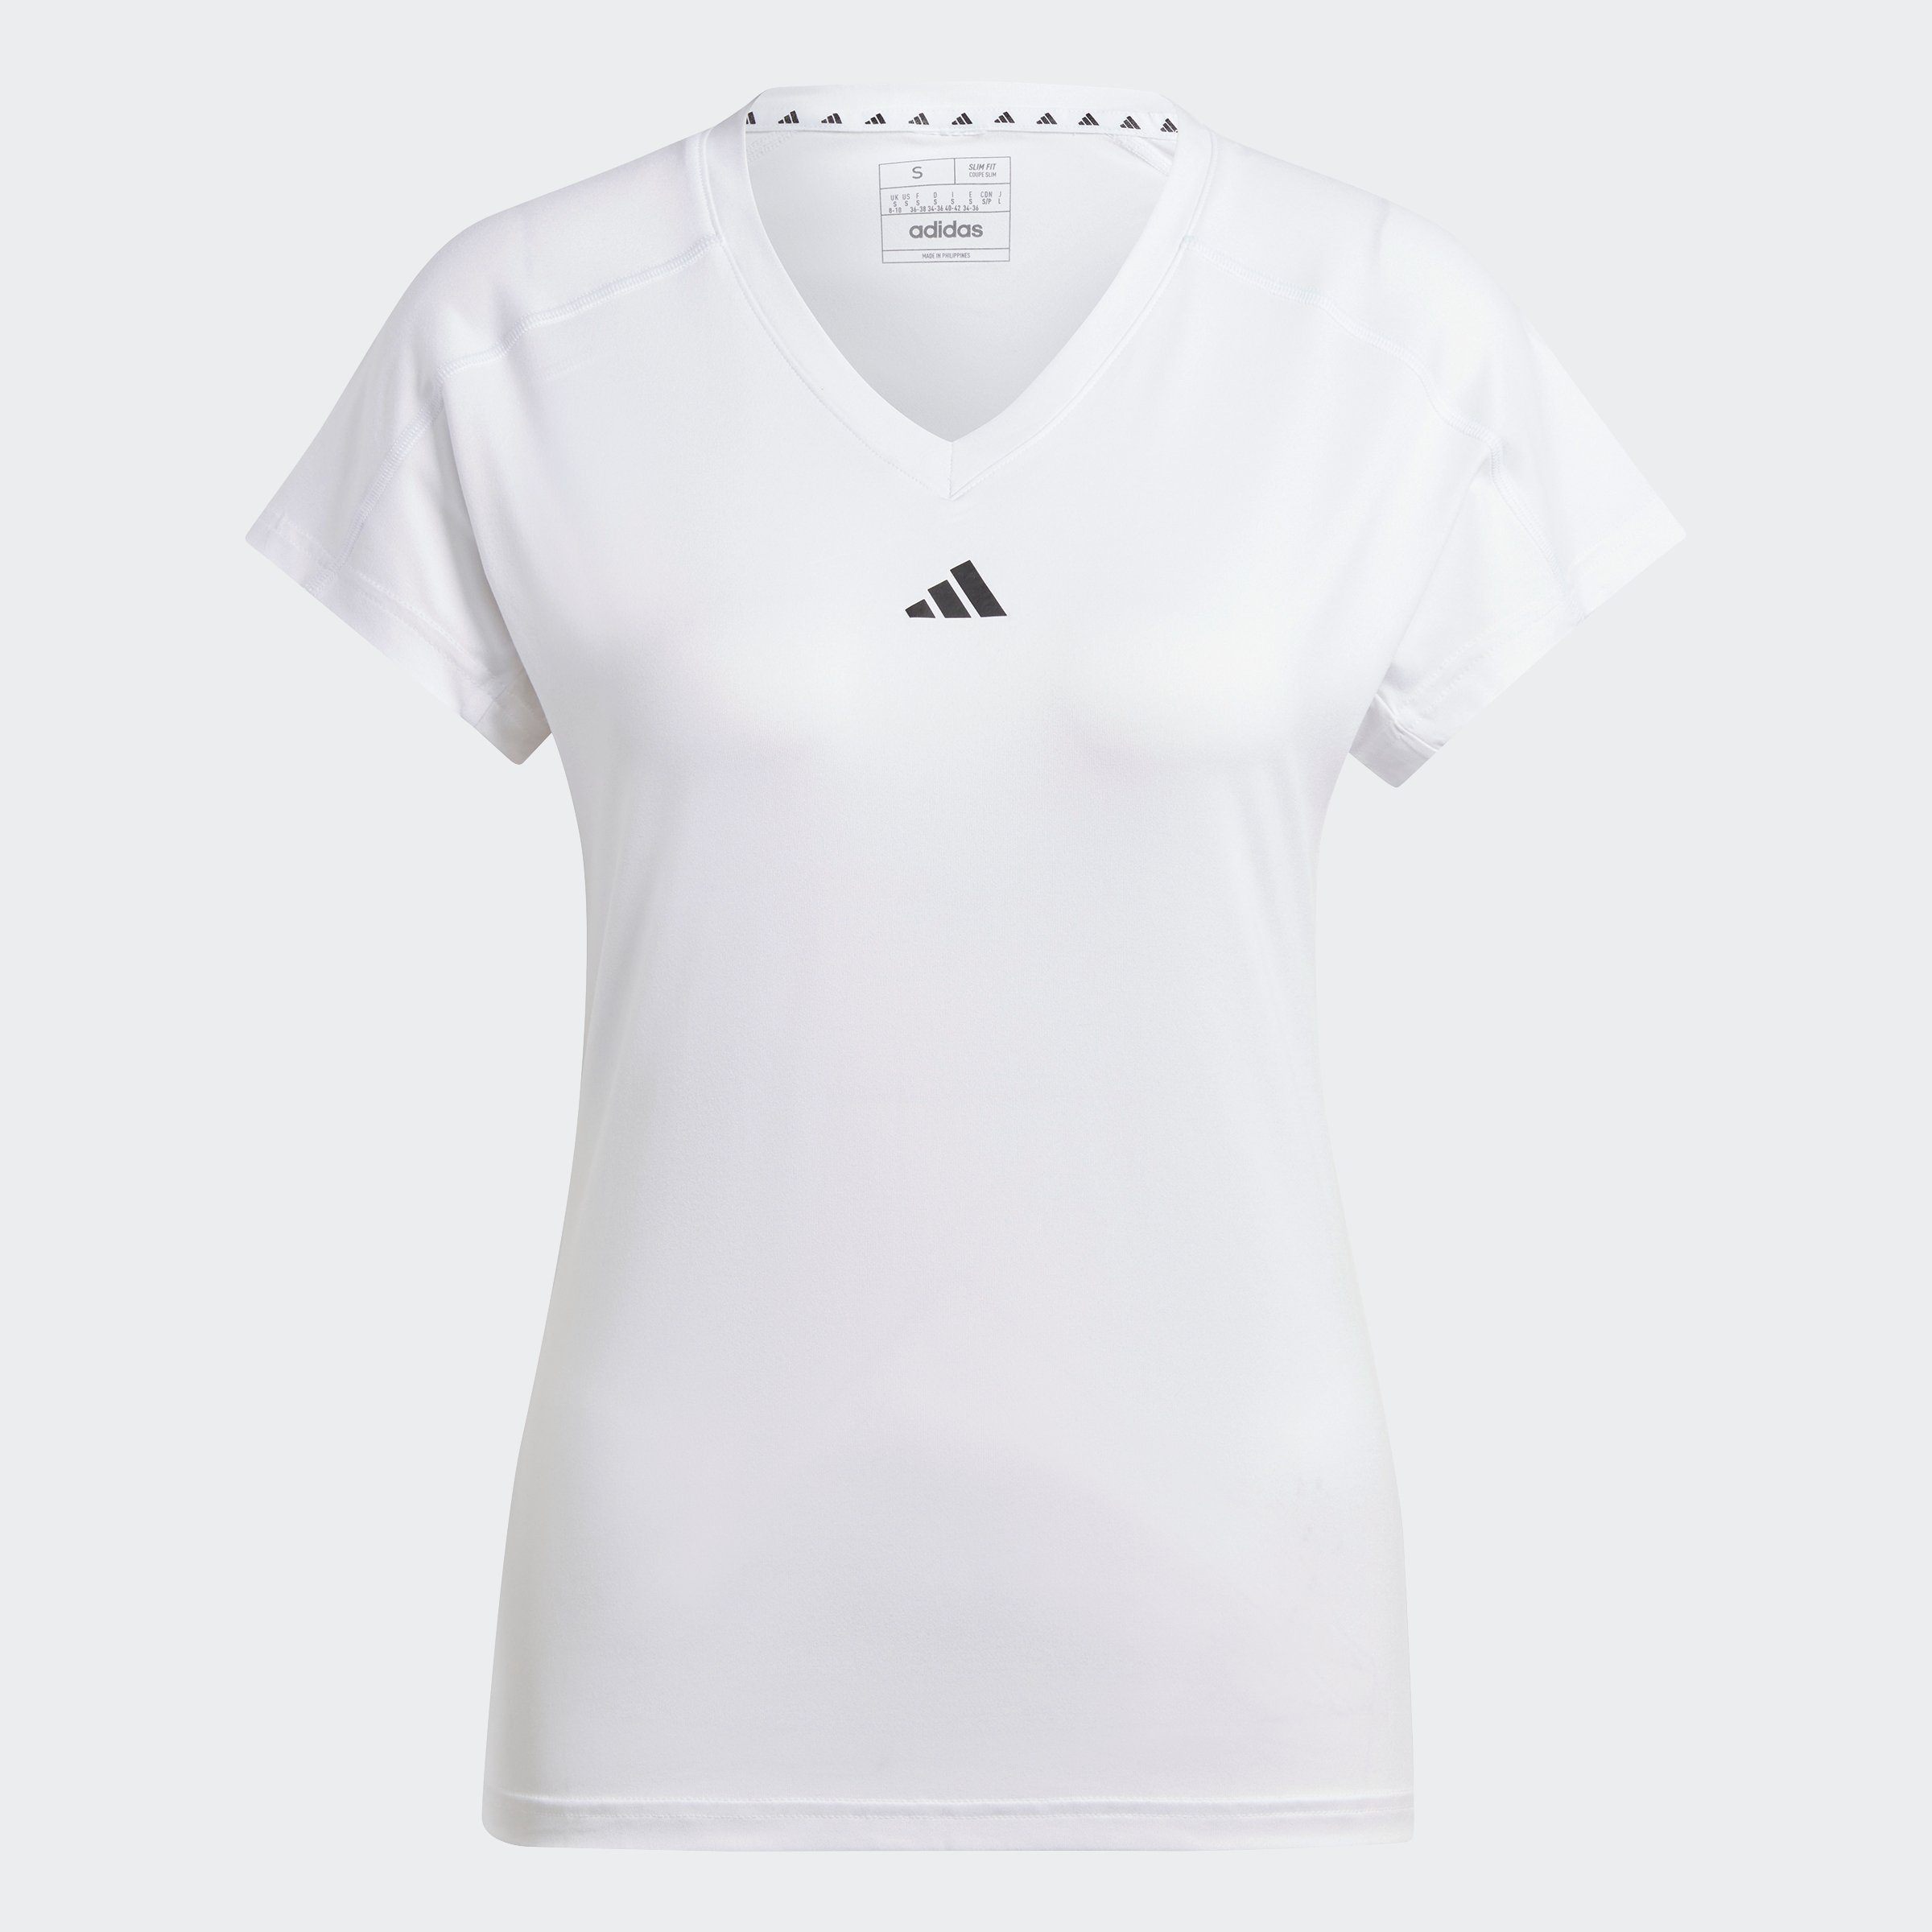 MINIMAL V-NECK AEROREADY Performance ESSENTIALS TRAIN White BRANDING T-Shirt adidas